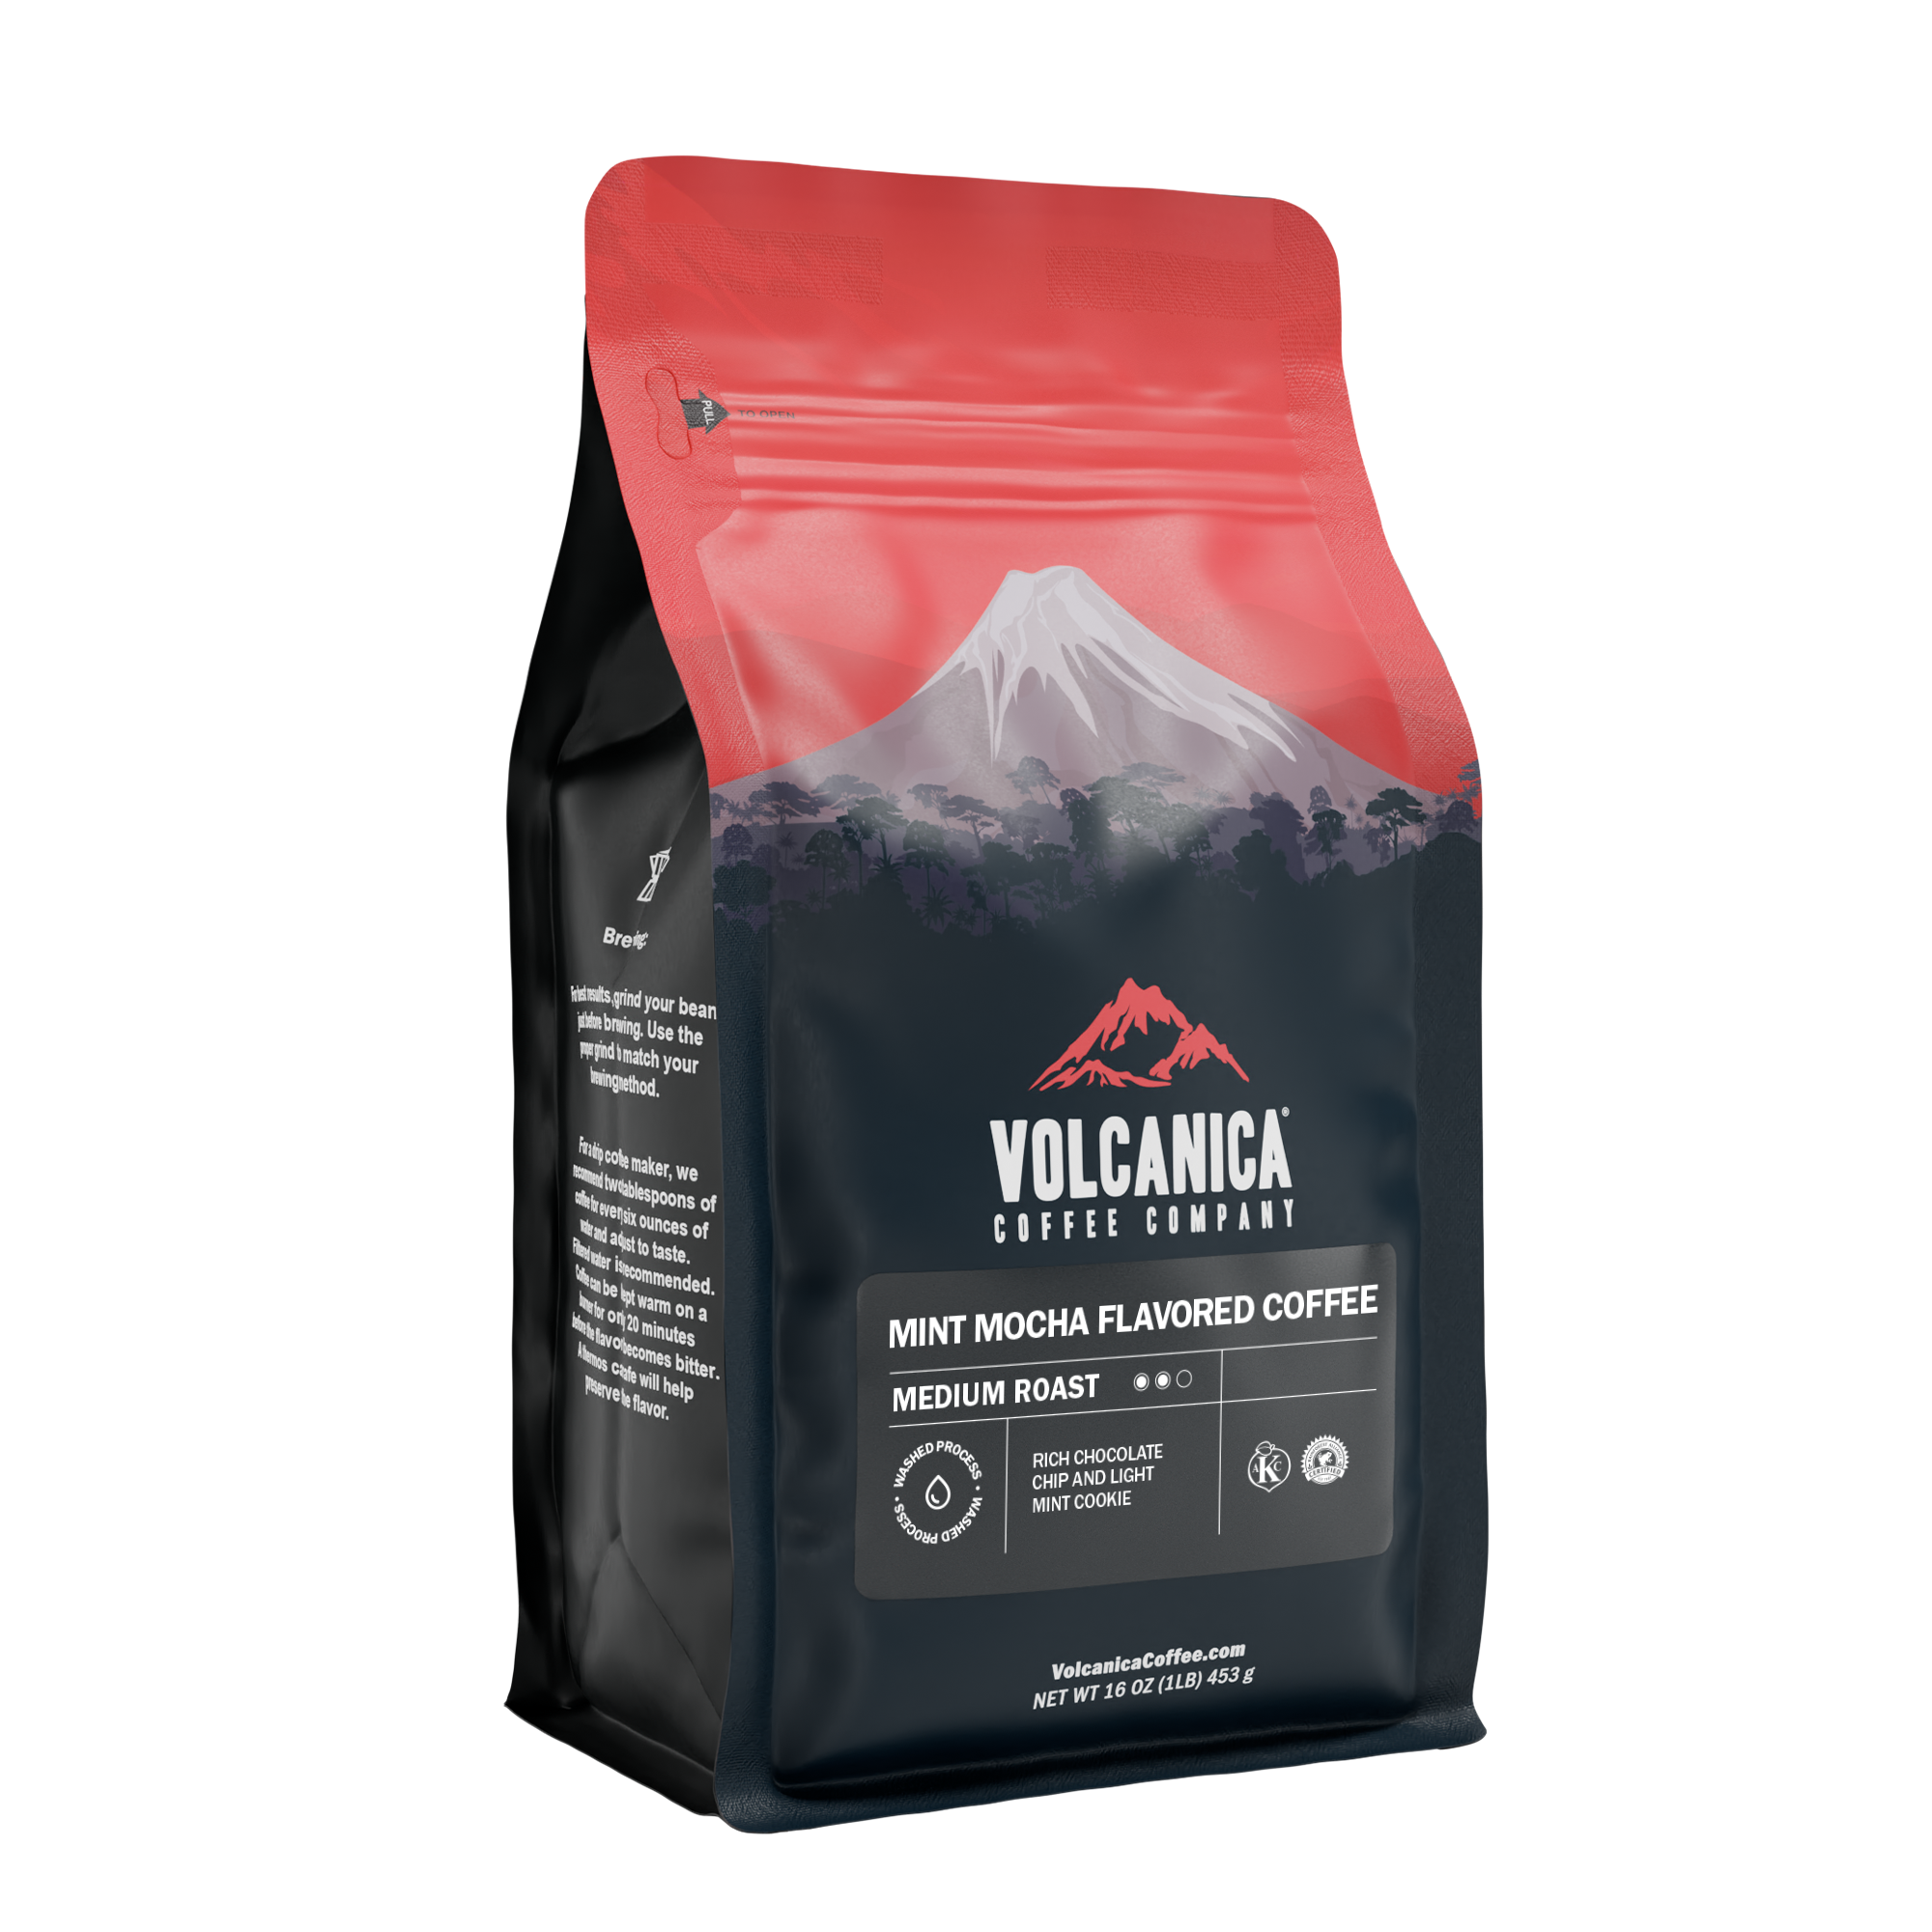 Mint Mocha Flavored Coffee - Volcanica Coffee